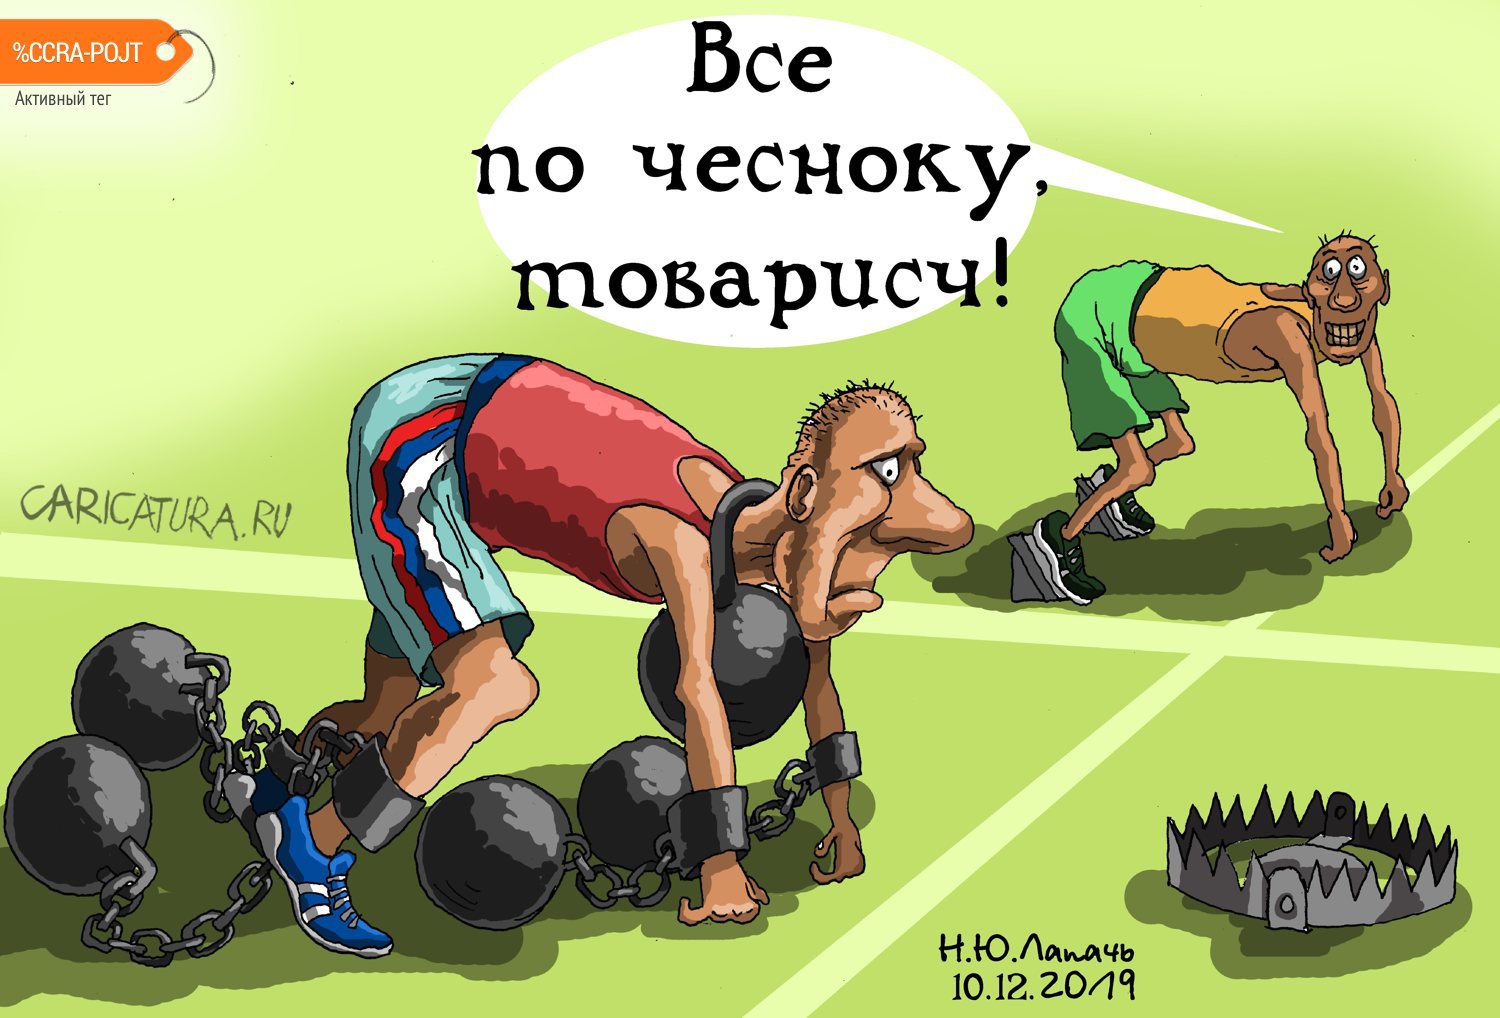 Карикатура "Низкий старт", Теплый Телогрей